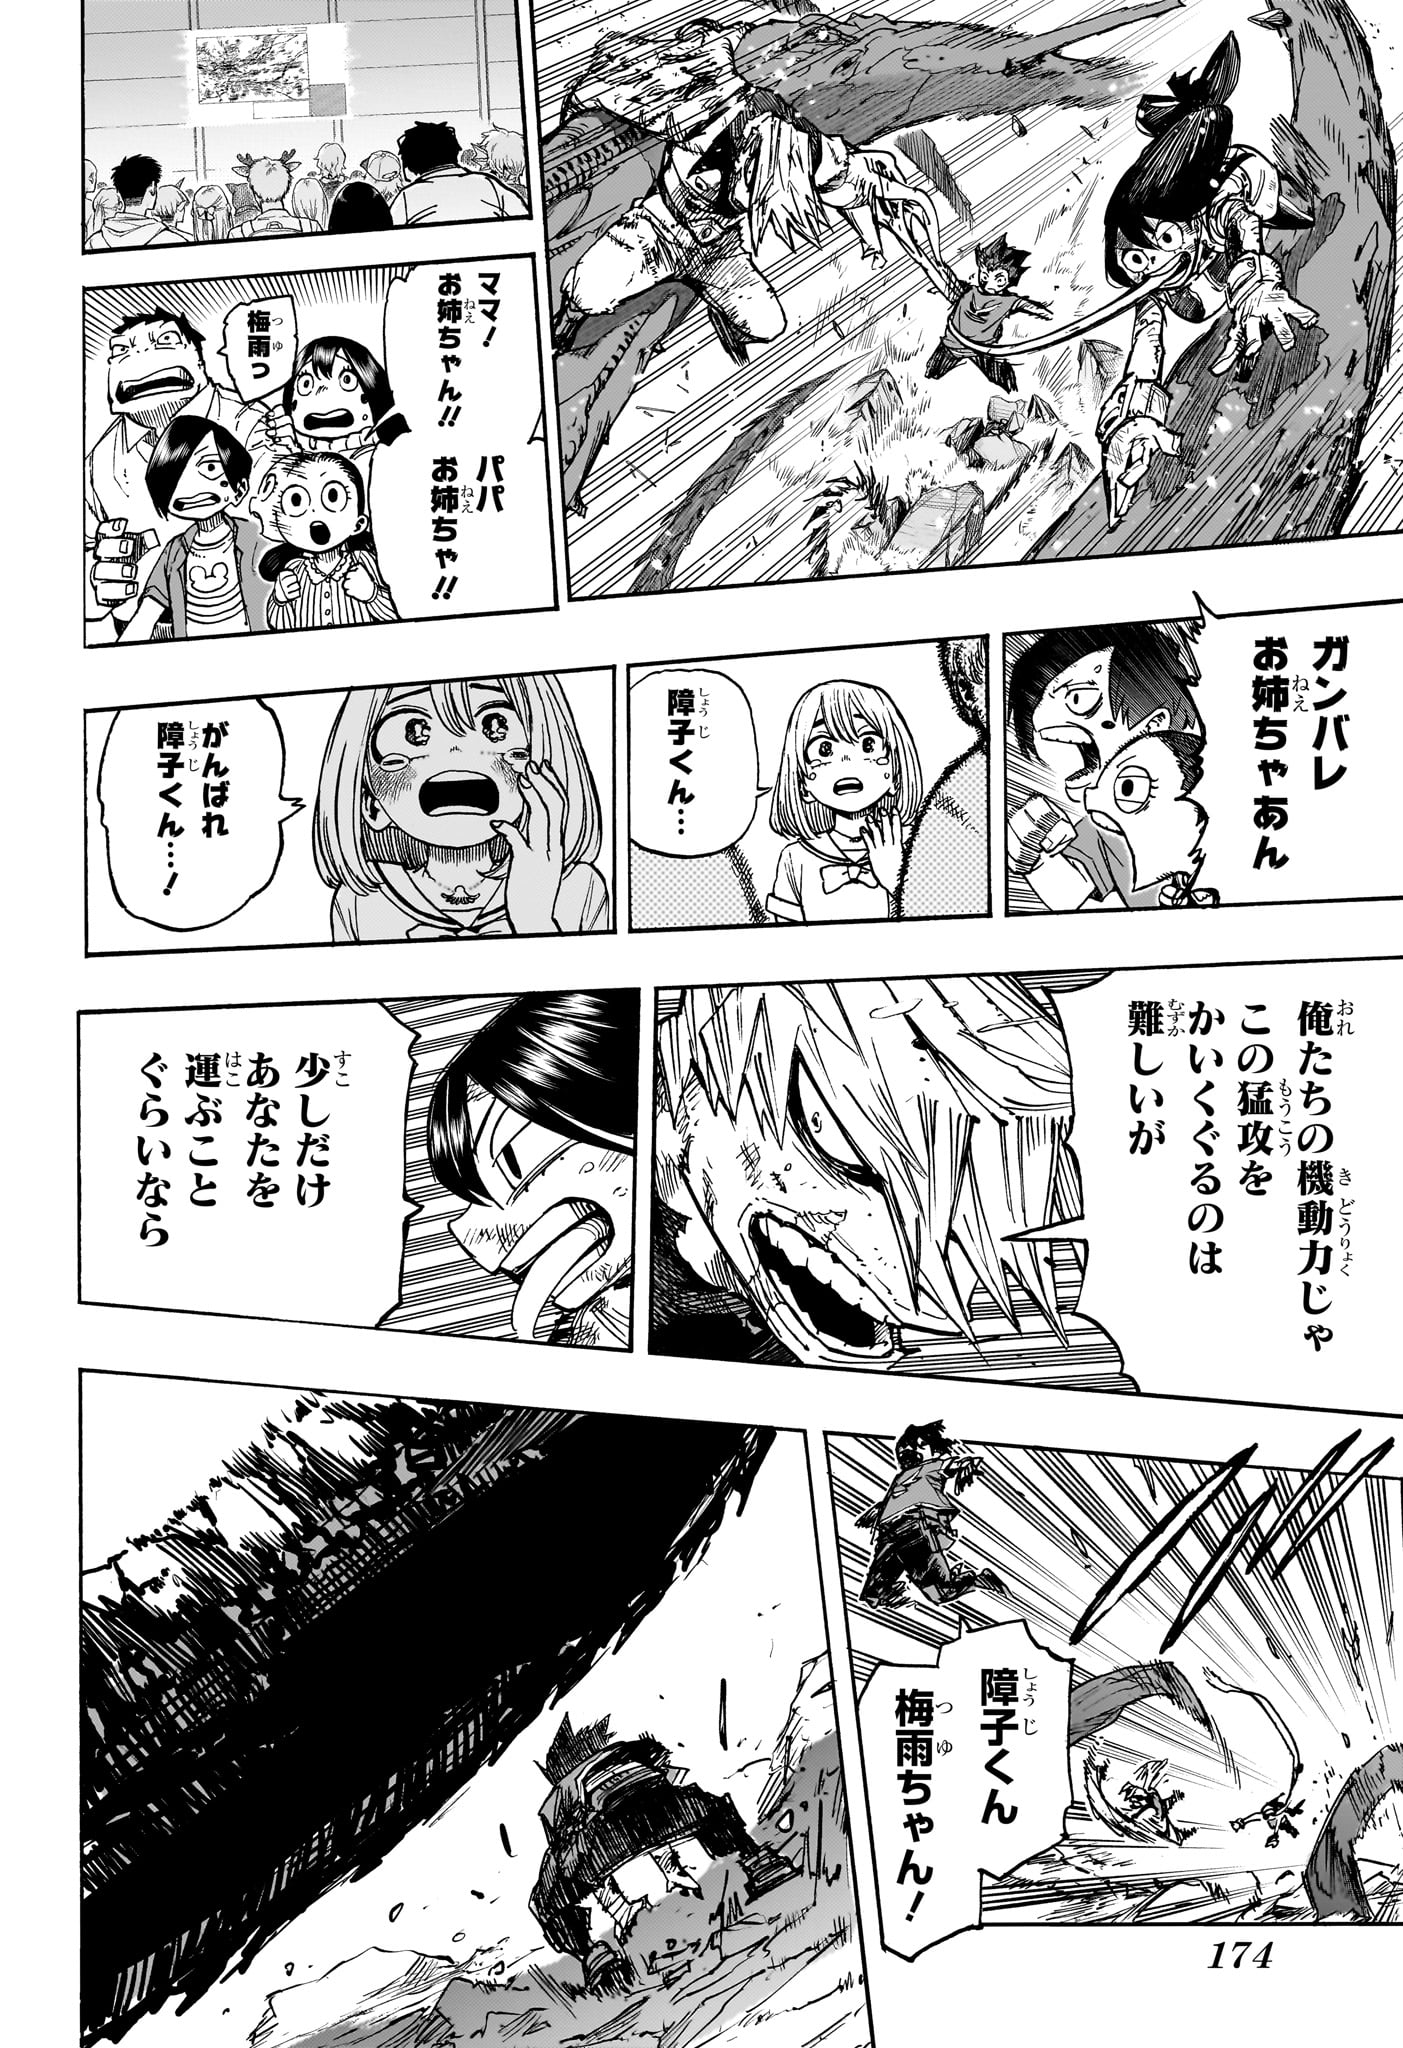 Boku no Hero Academia - Chapter 422 - Page 6